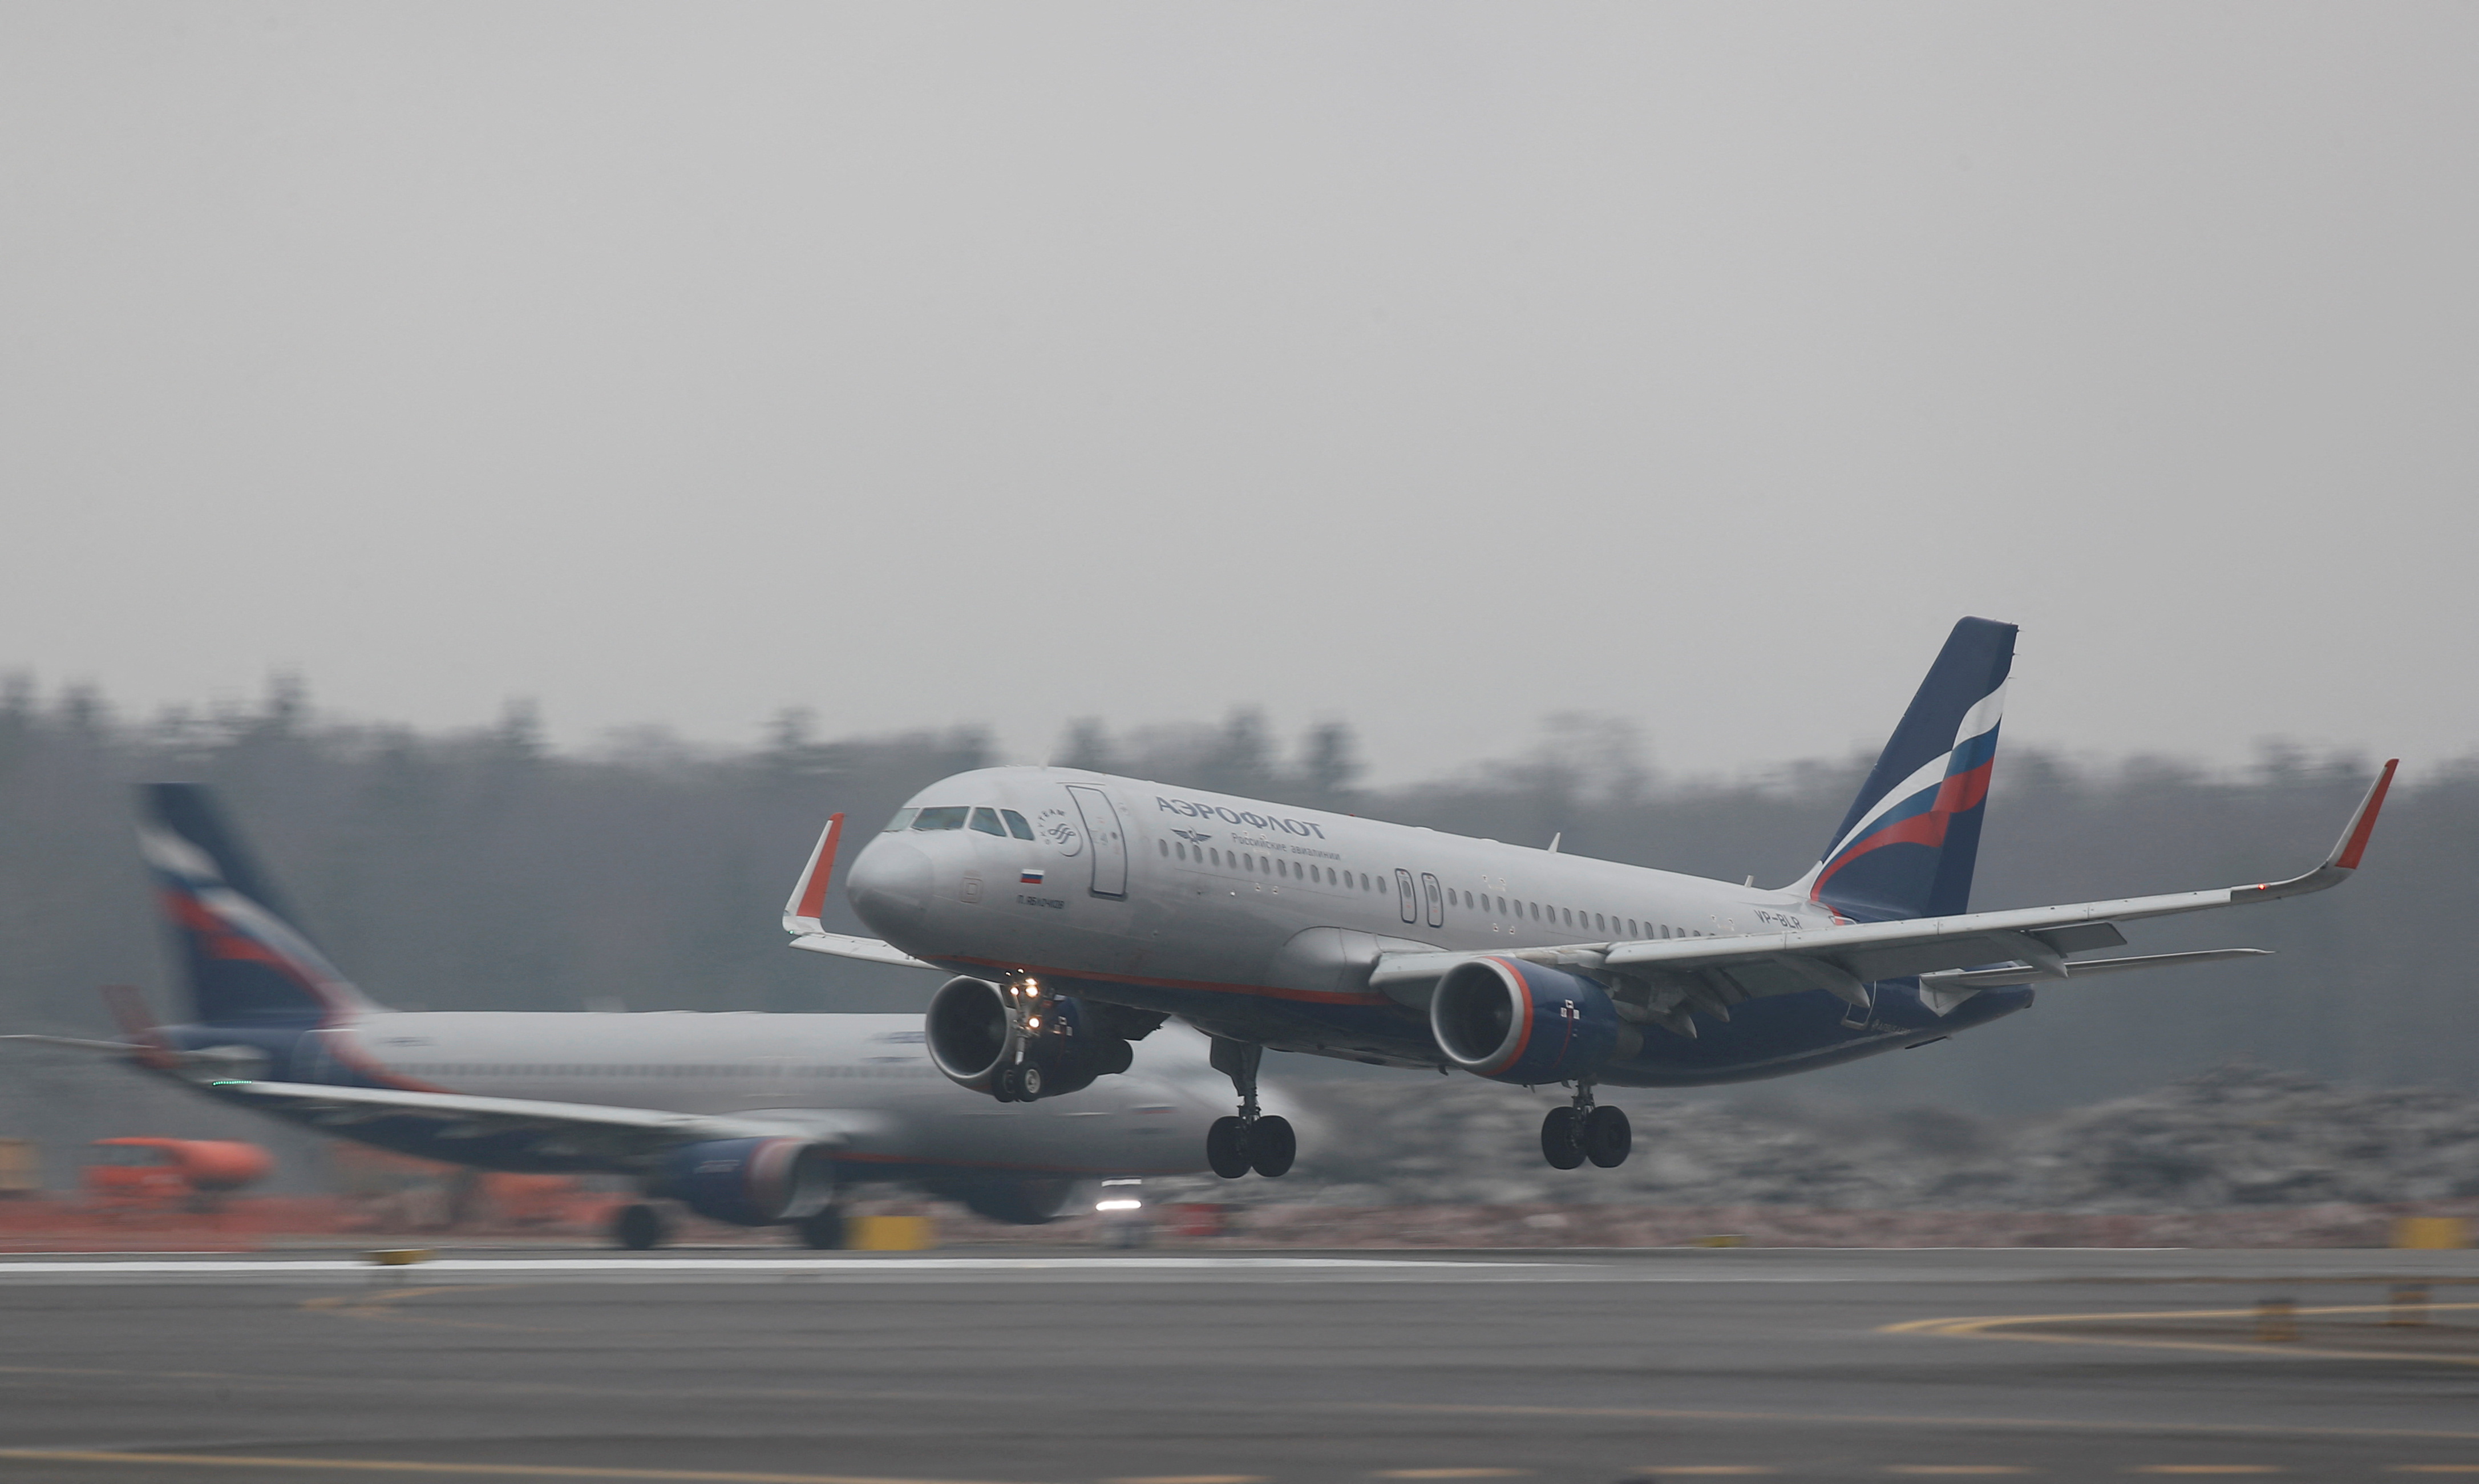 Aeroflot Airbus A320-200 plane lands at Sheremetyevo International Airport outside Moscow